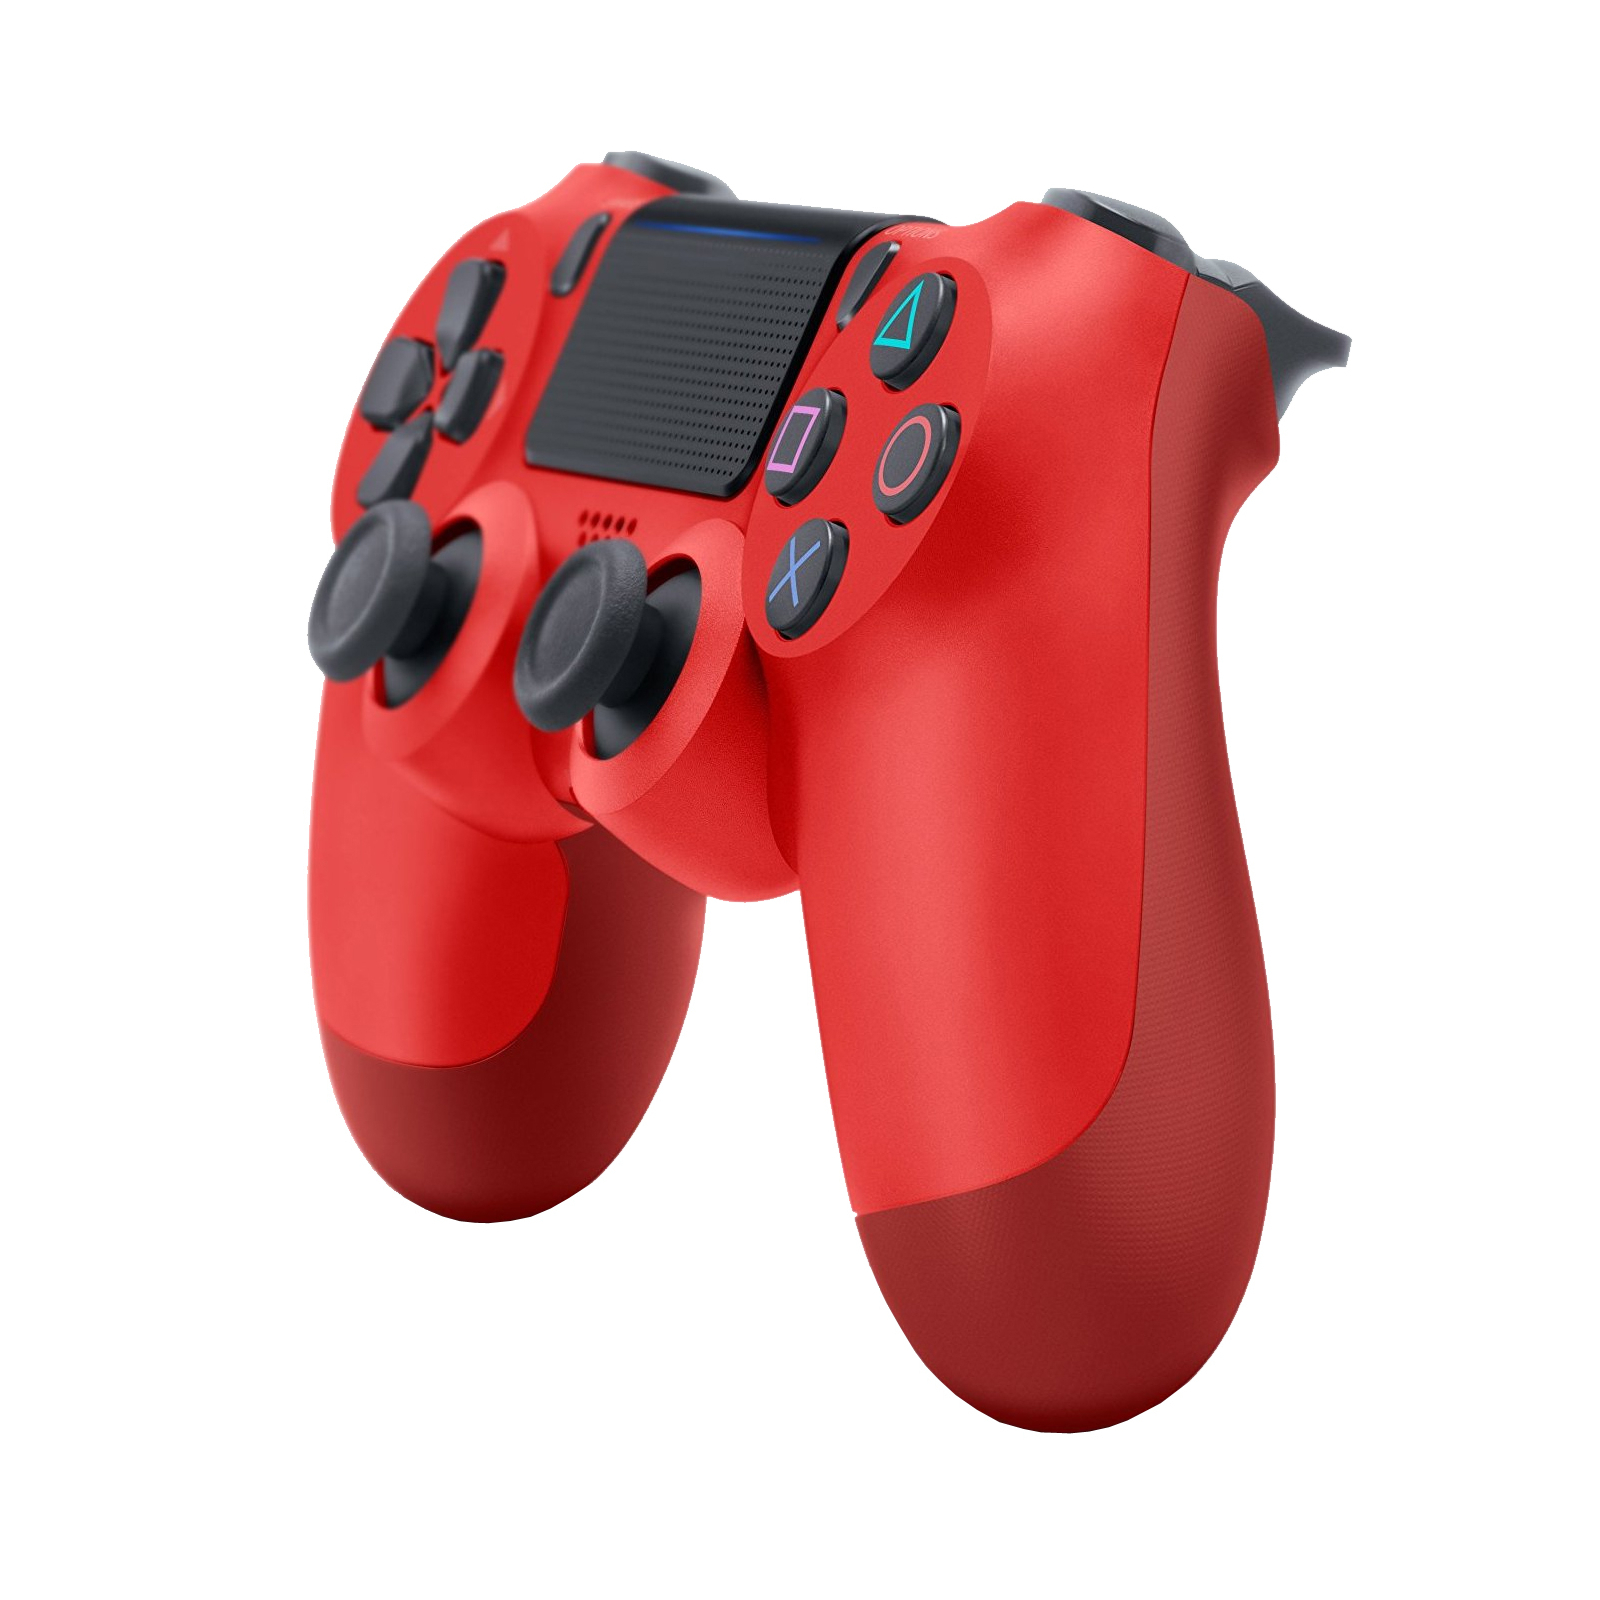 Геймпад Playstation PS4 Dualshock 4 V2 Red изображение 2